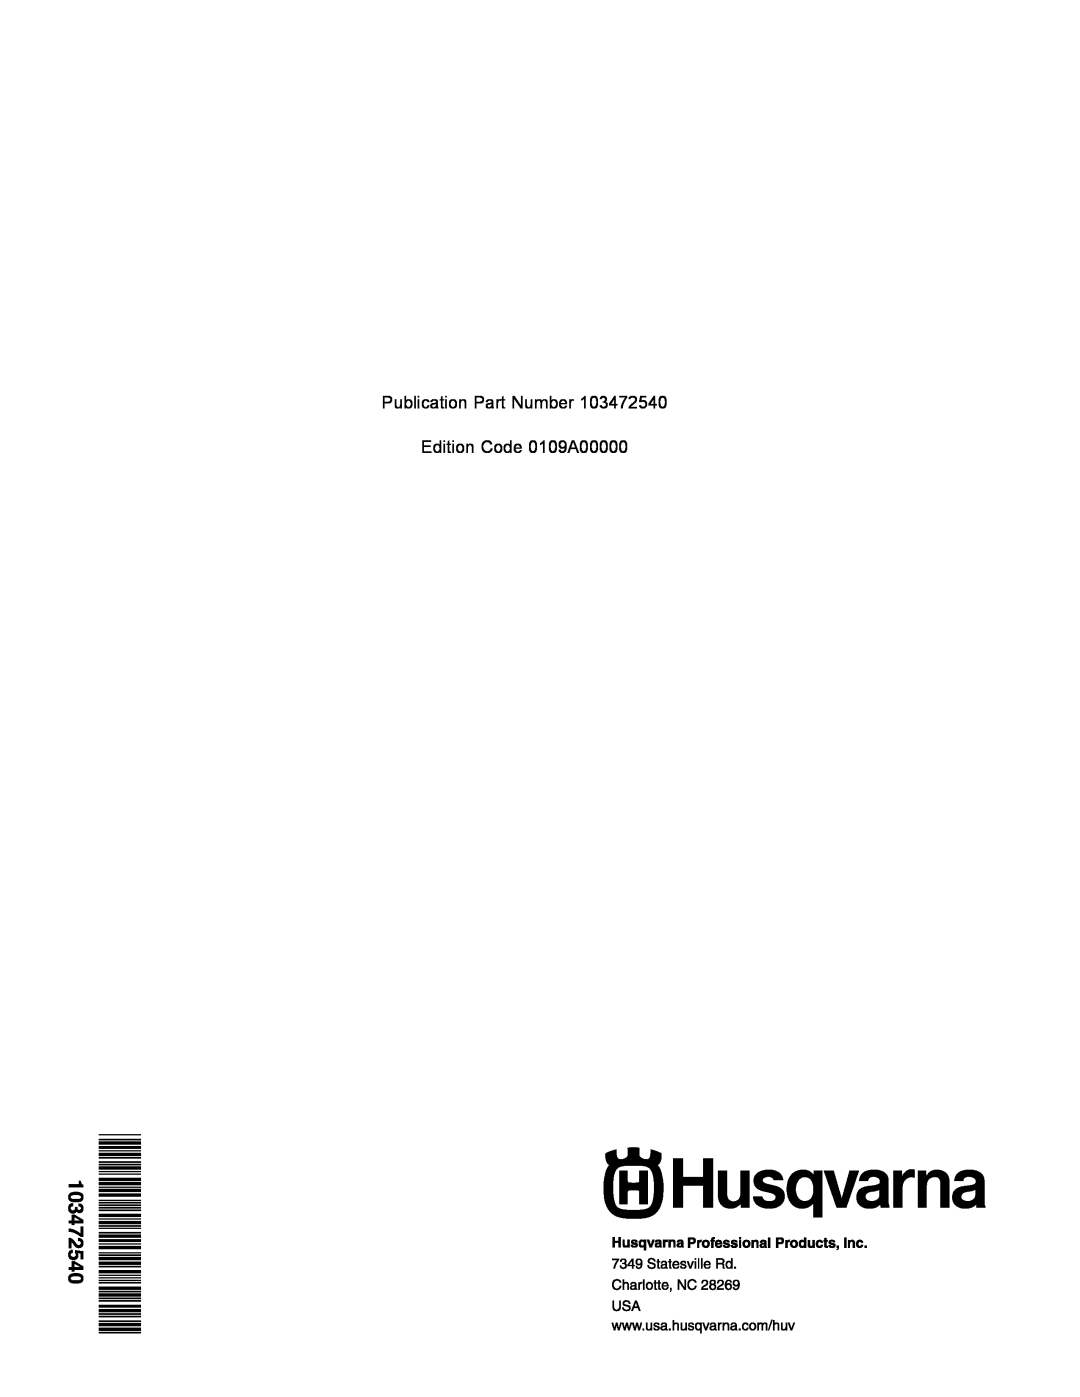 Husqvarna HUV 4214, HUV 4414-XP owner manual 103472540, Publication Part Number, Edition Code 0109A00000 